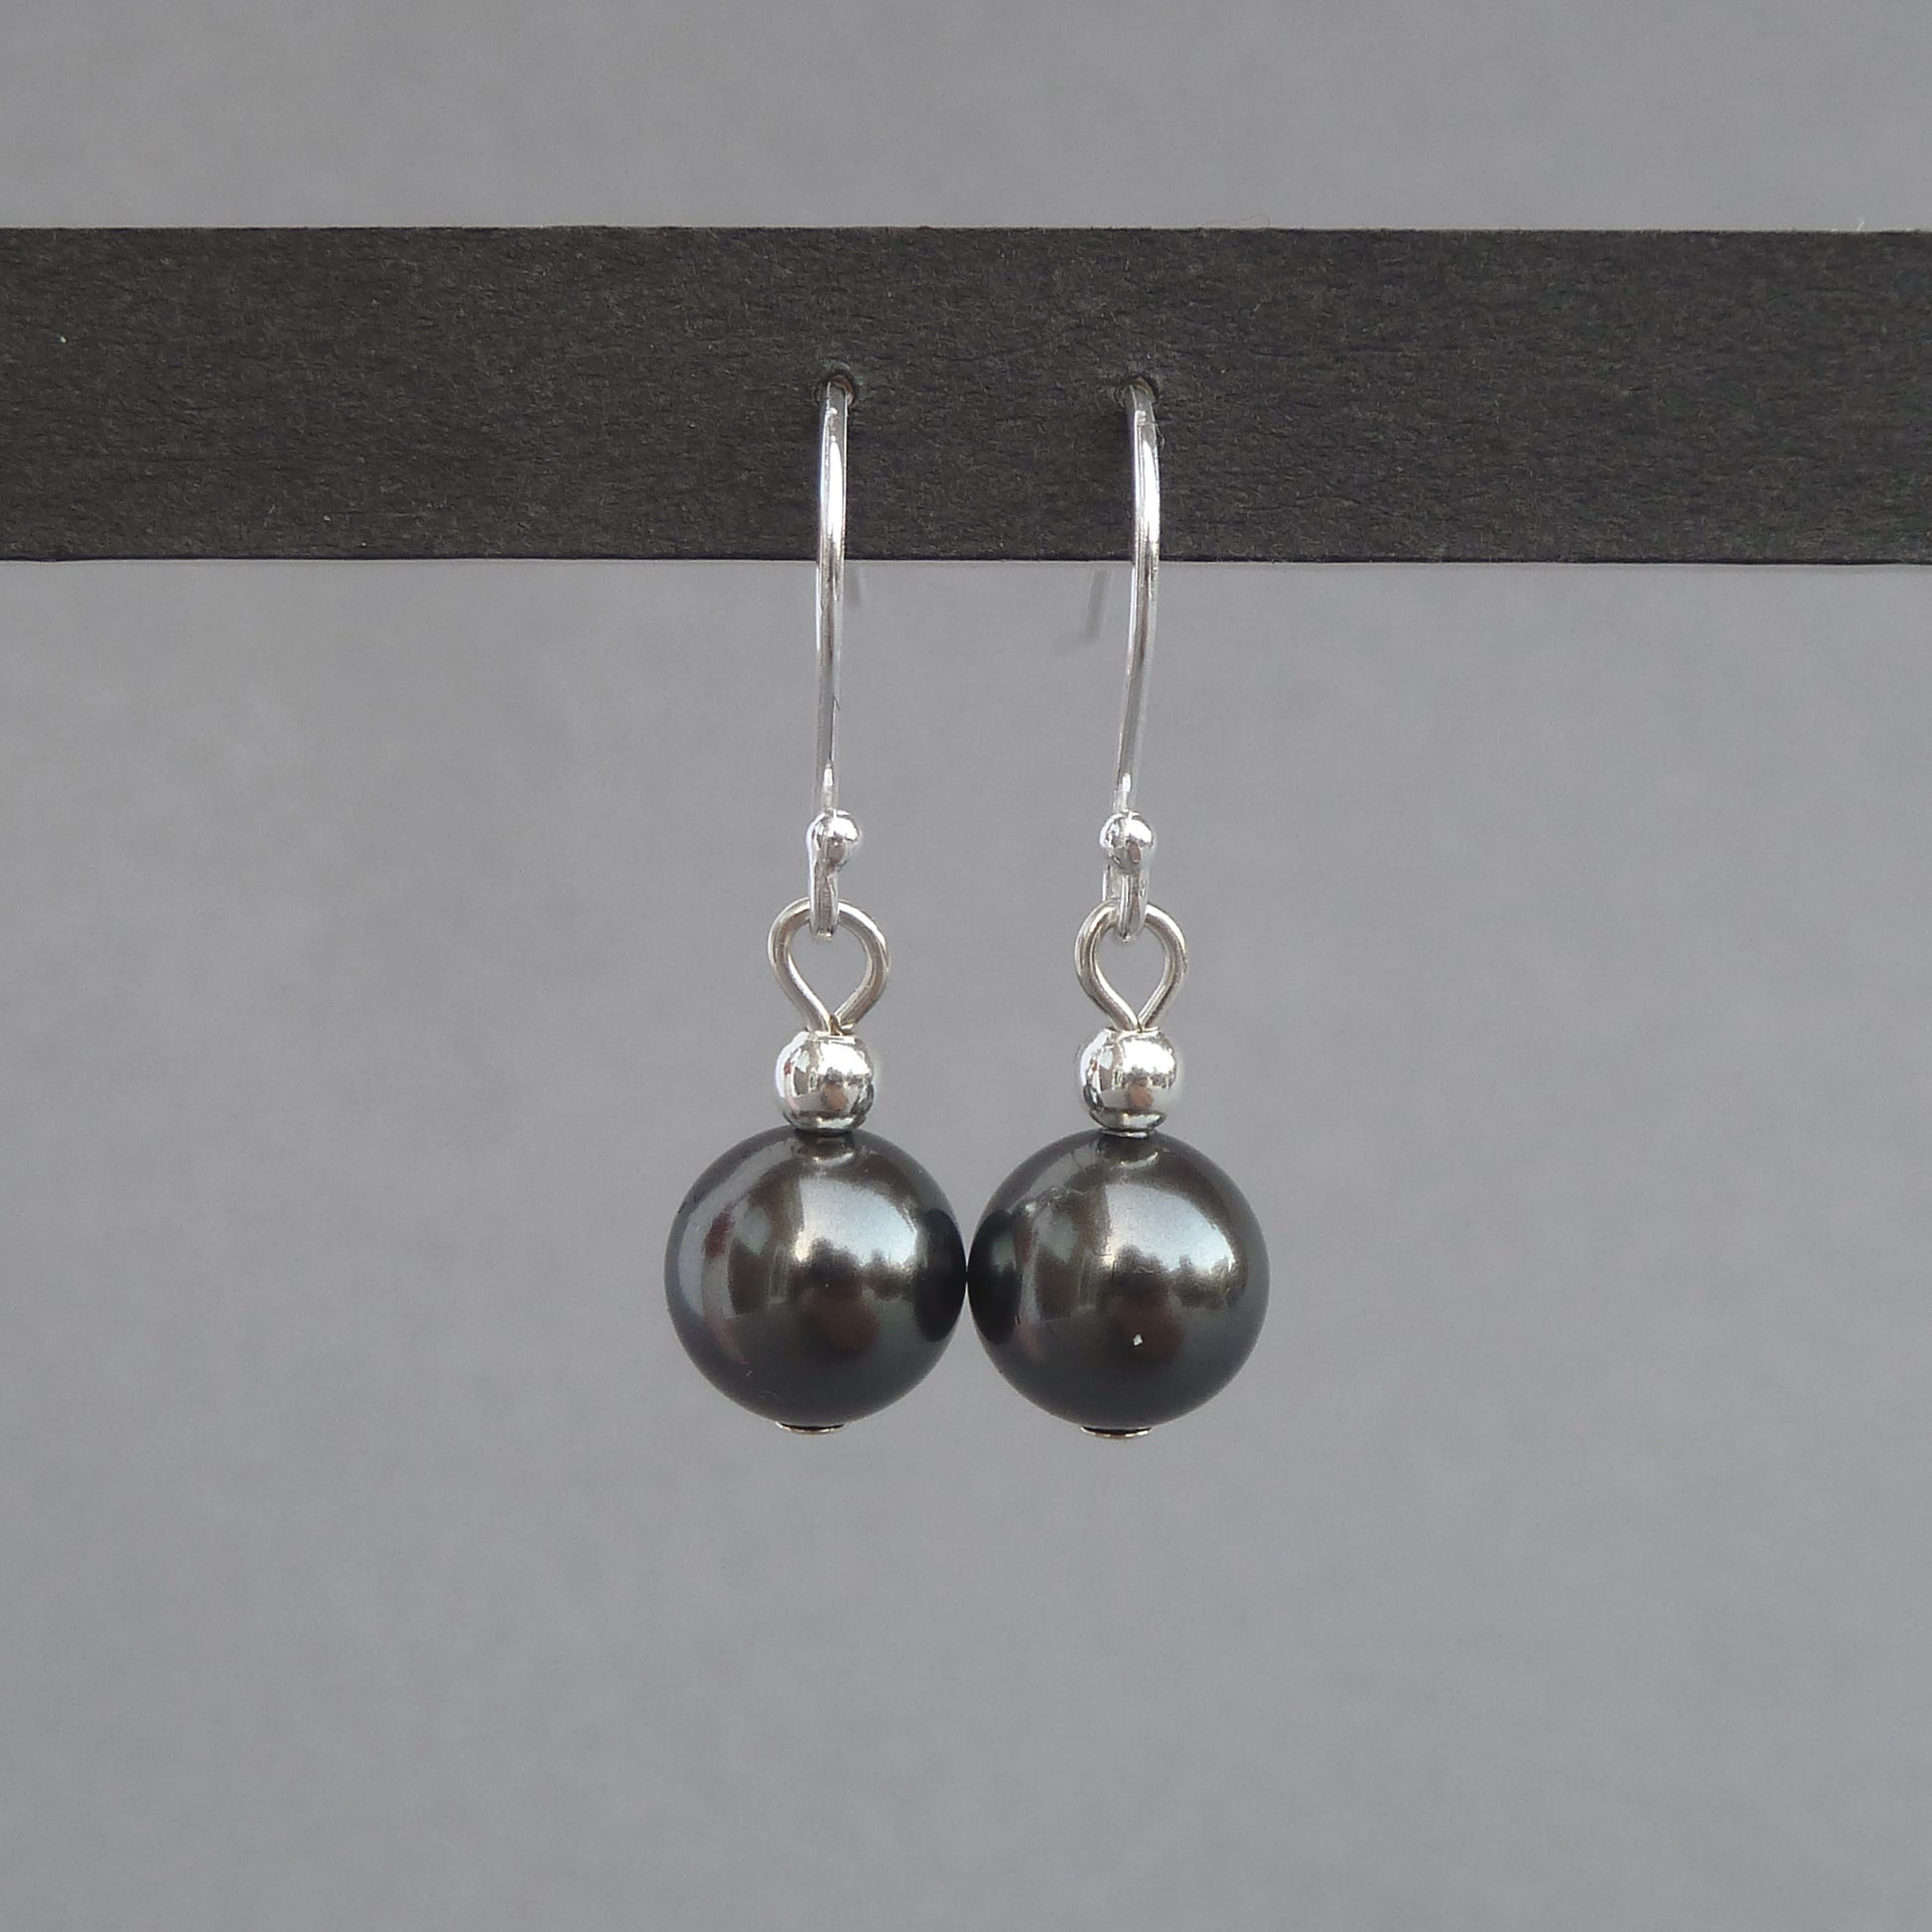 Charcoal grey bridesmaids earrings